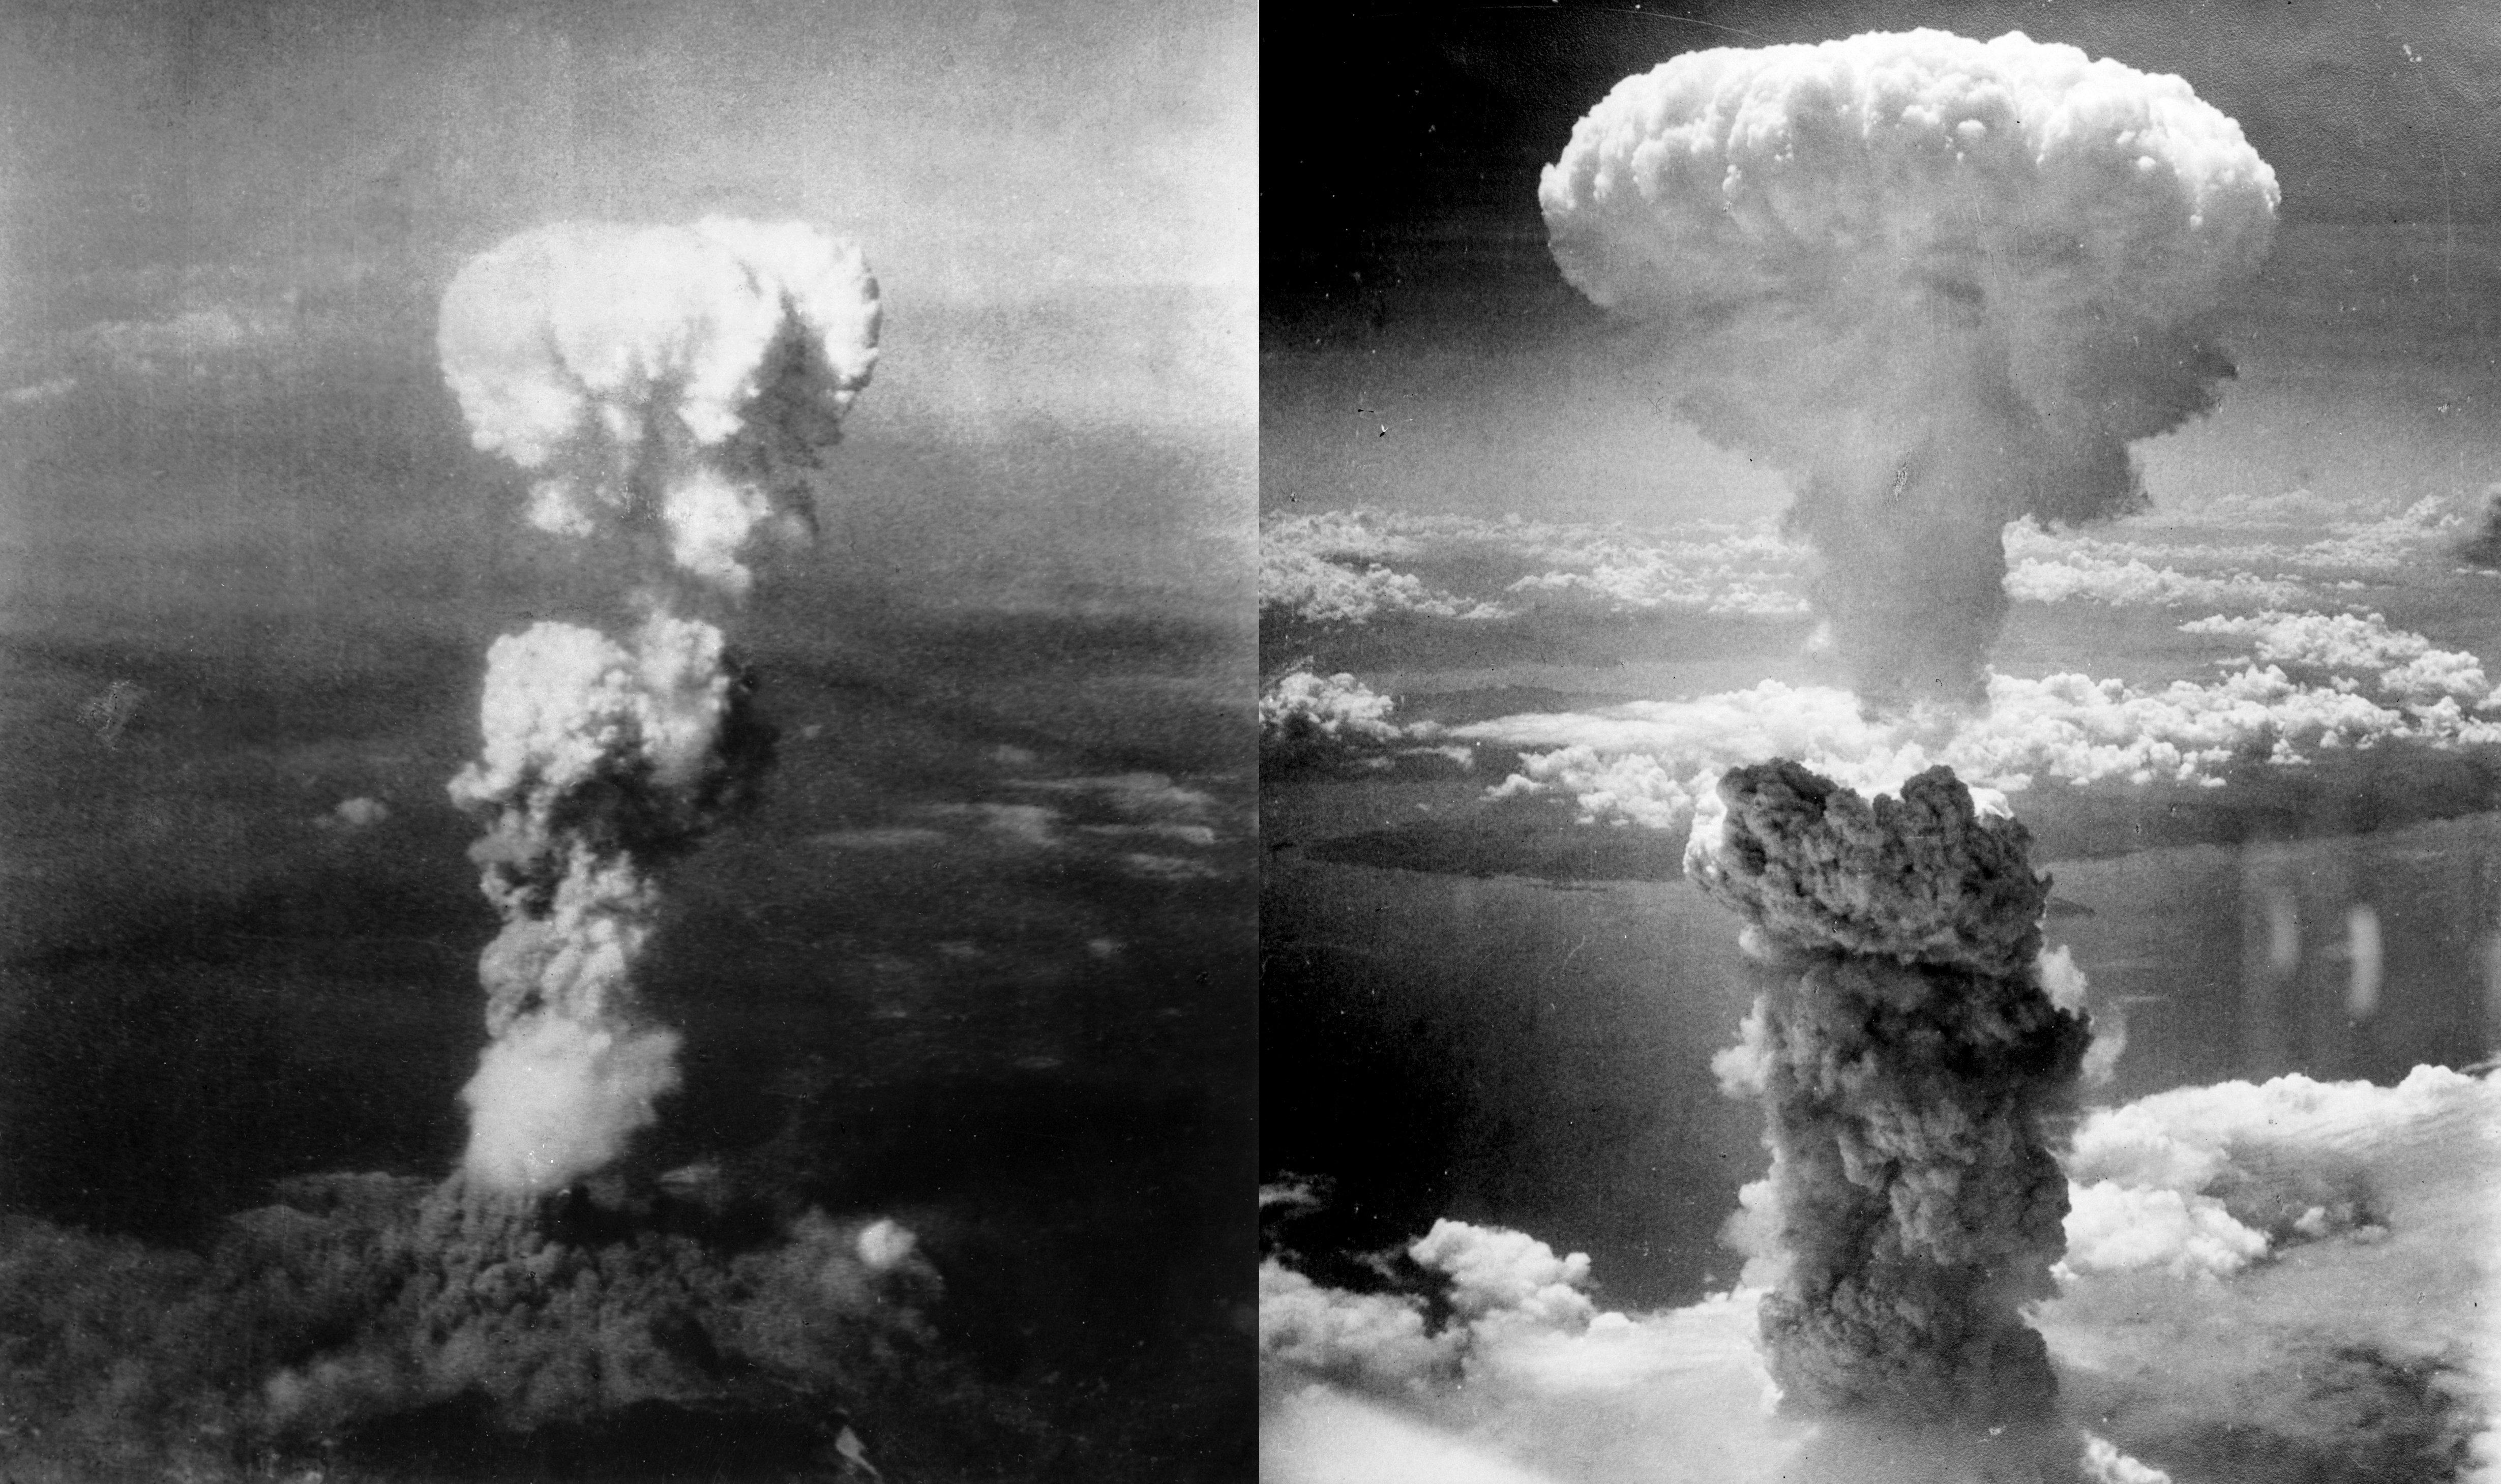 truman justified atomic bomb